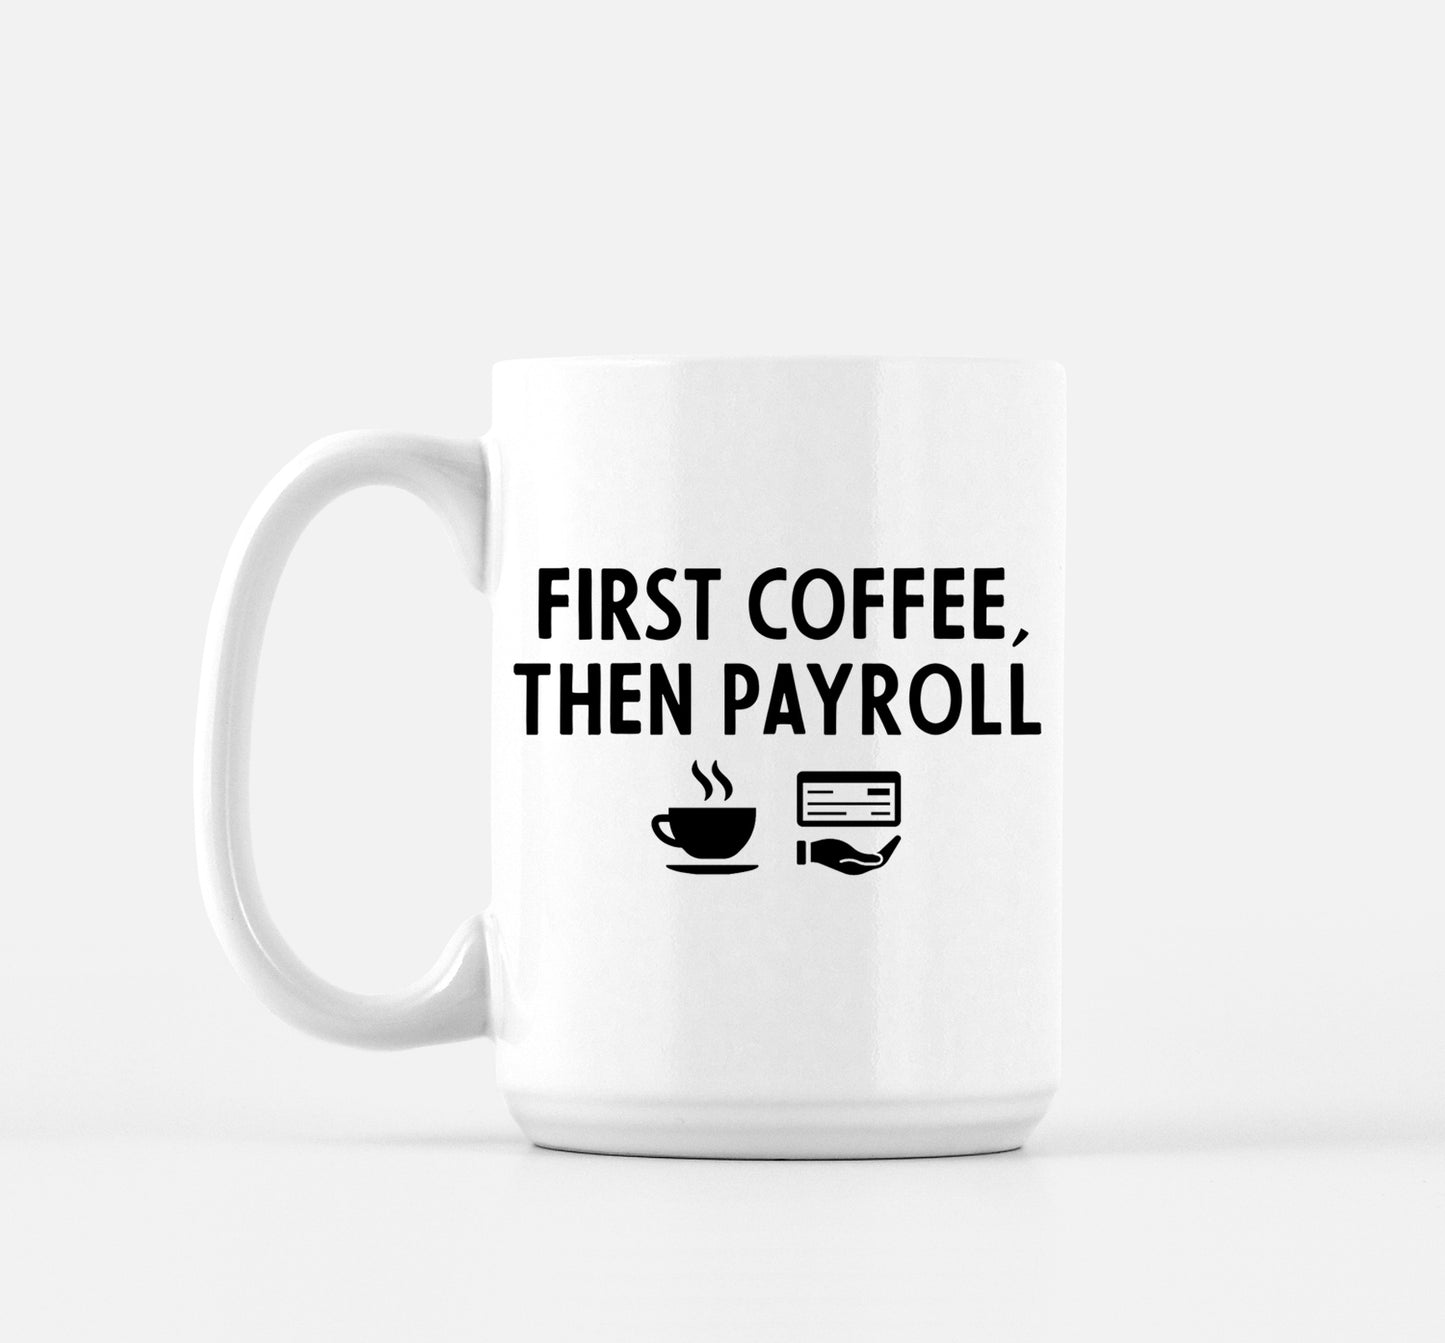 Payroll Coffee Mug by The Office Art Guy